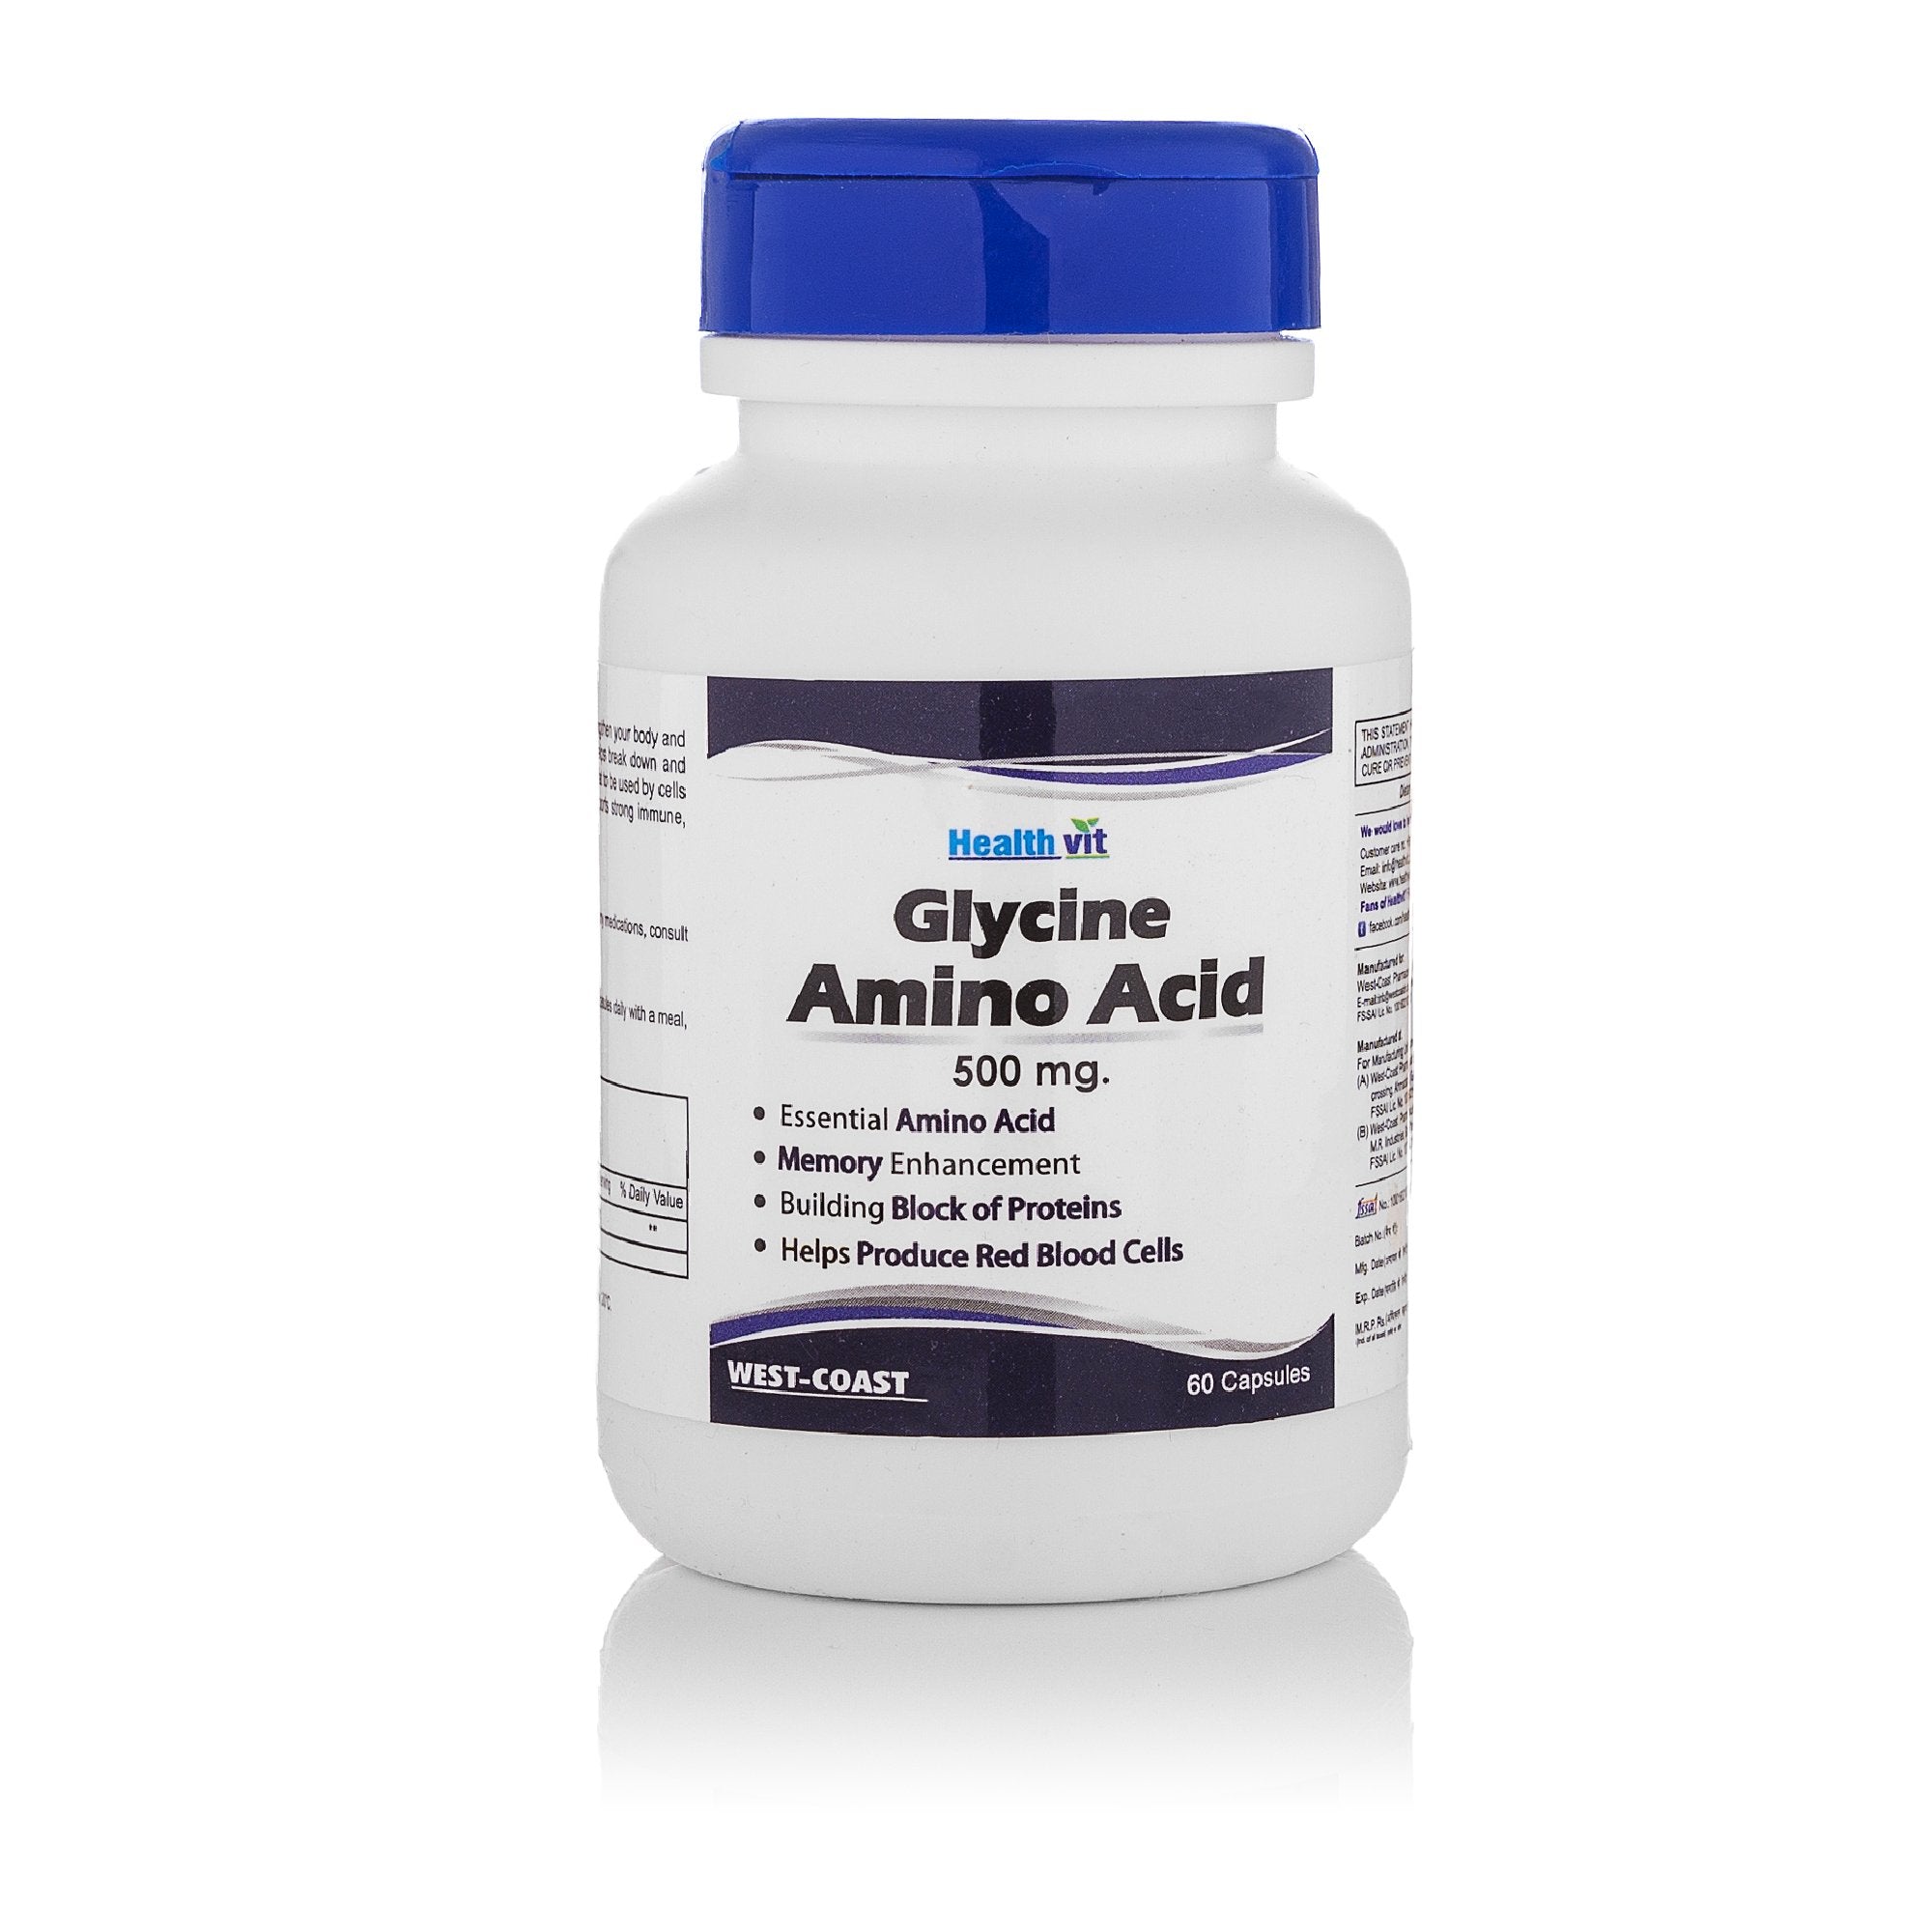 Healthvit Glycine Amino Acid 500 mg - 60 Capsules